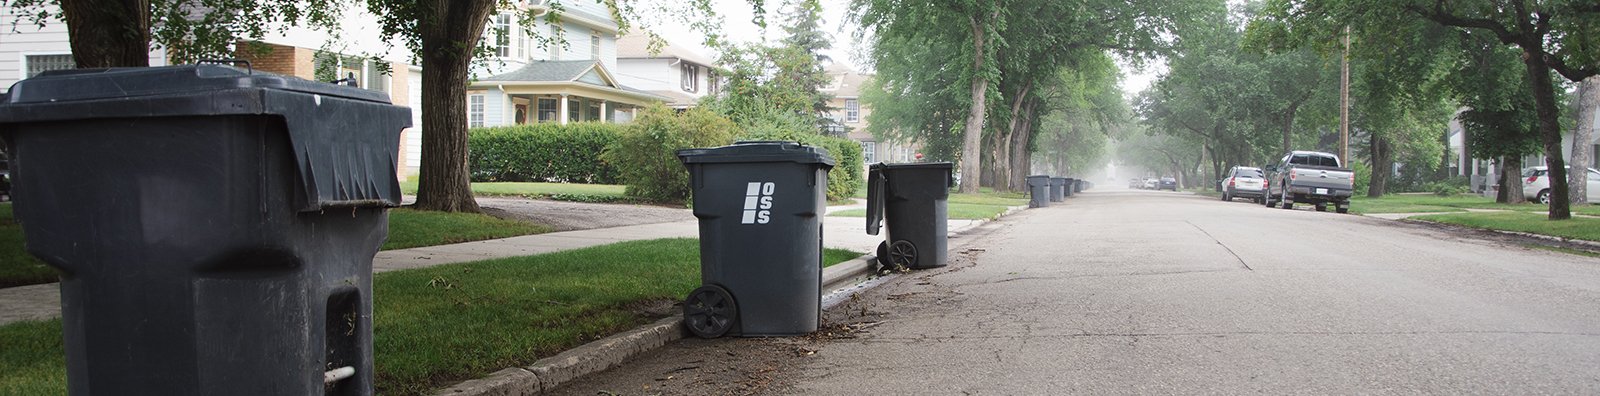 Garbage bins lined up down street